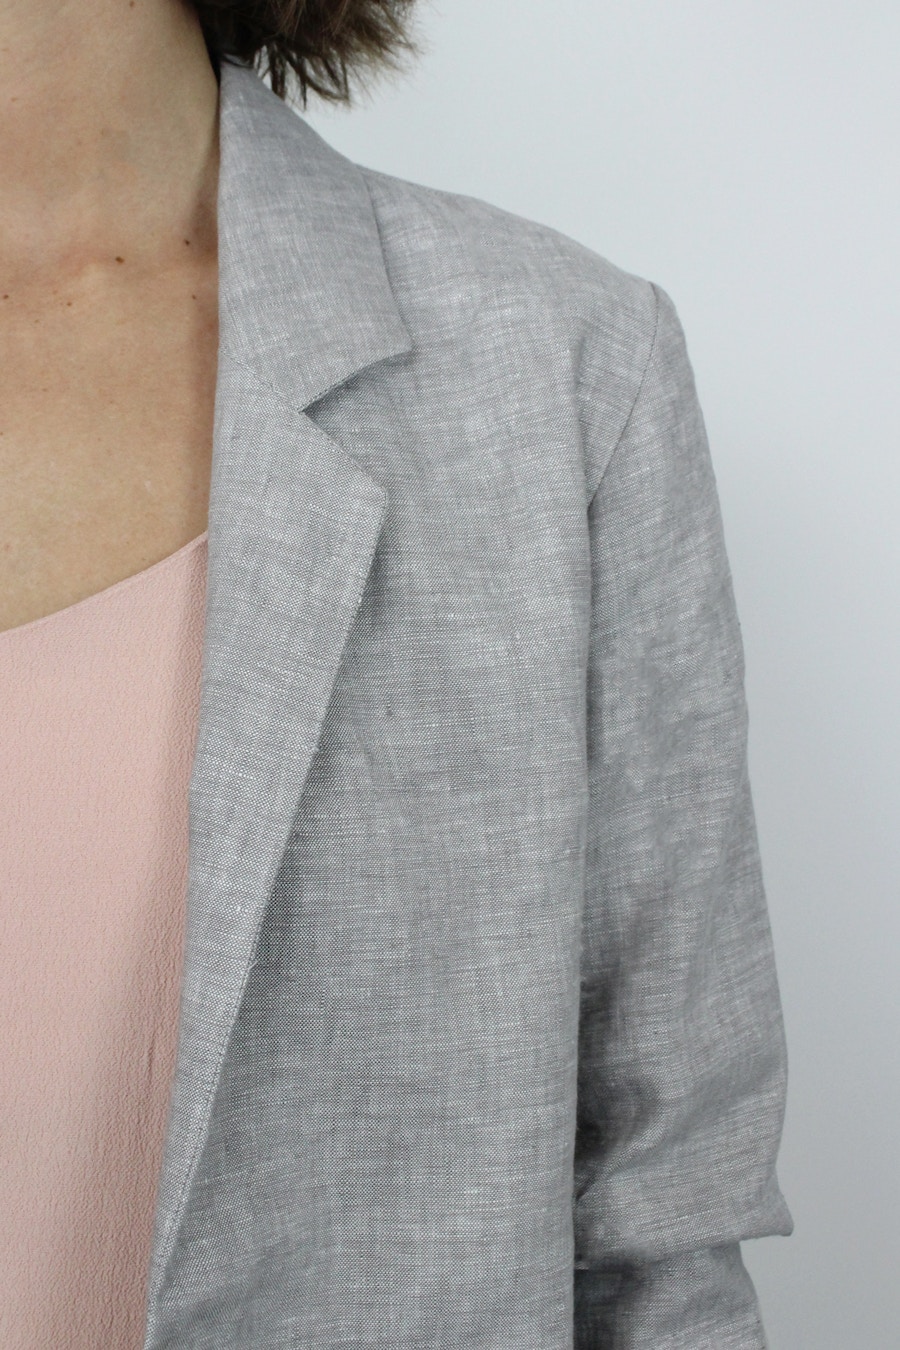 Barbara jacket republique du chiffon pattern front lapel chambray linen fabric by the fabric store